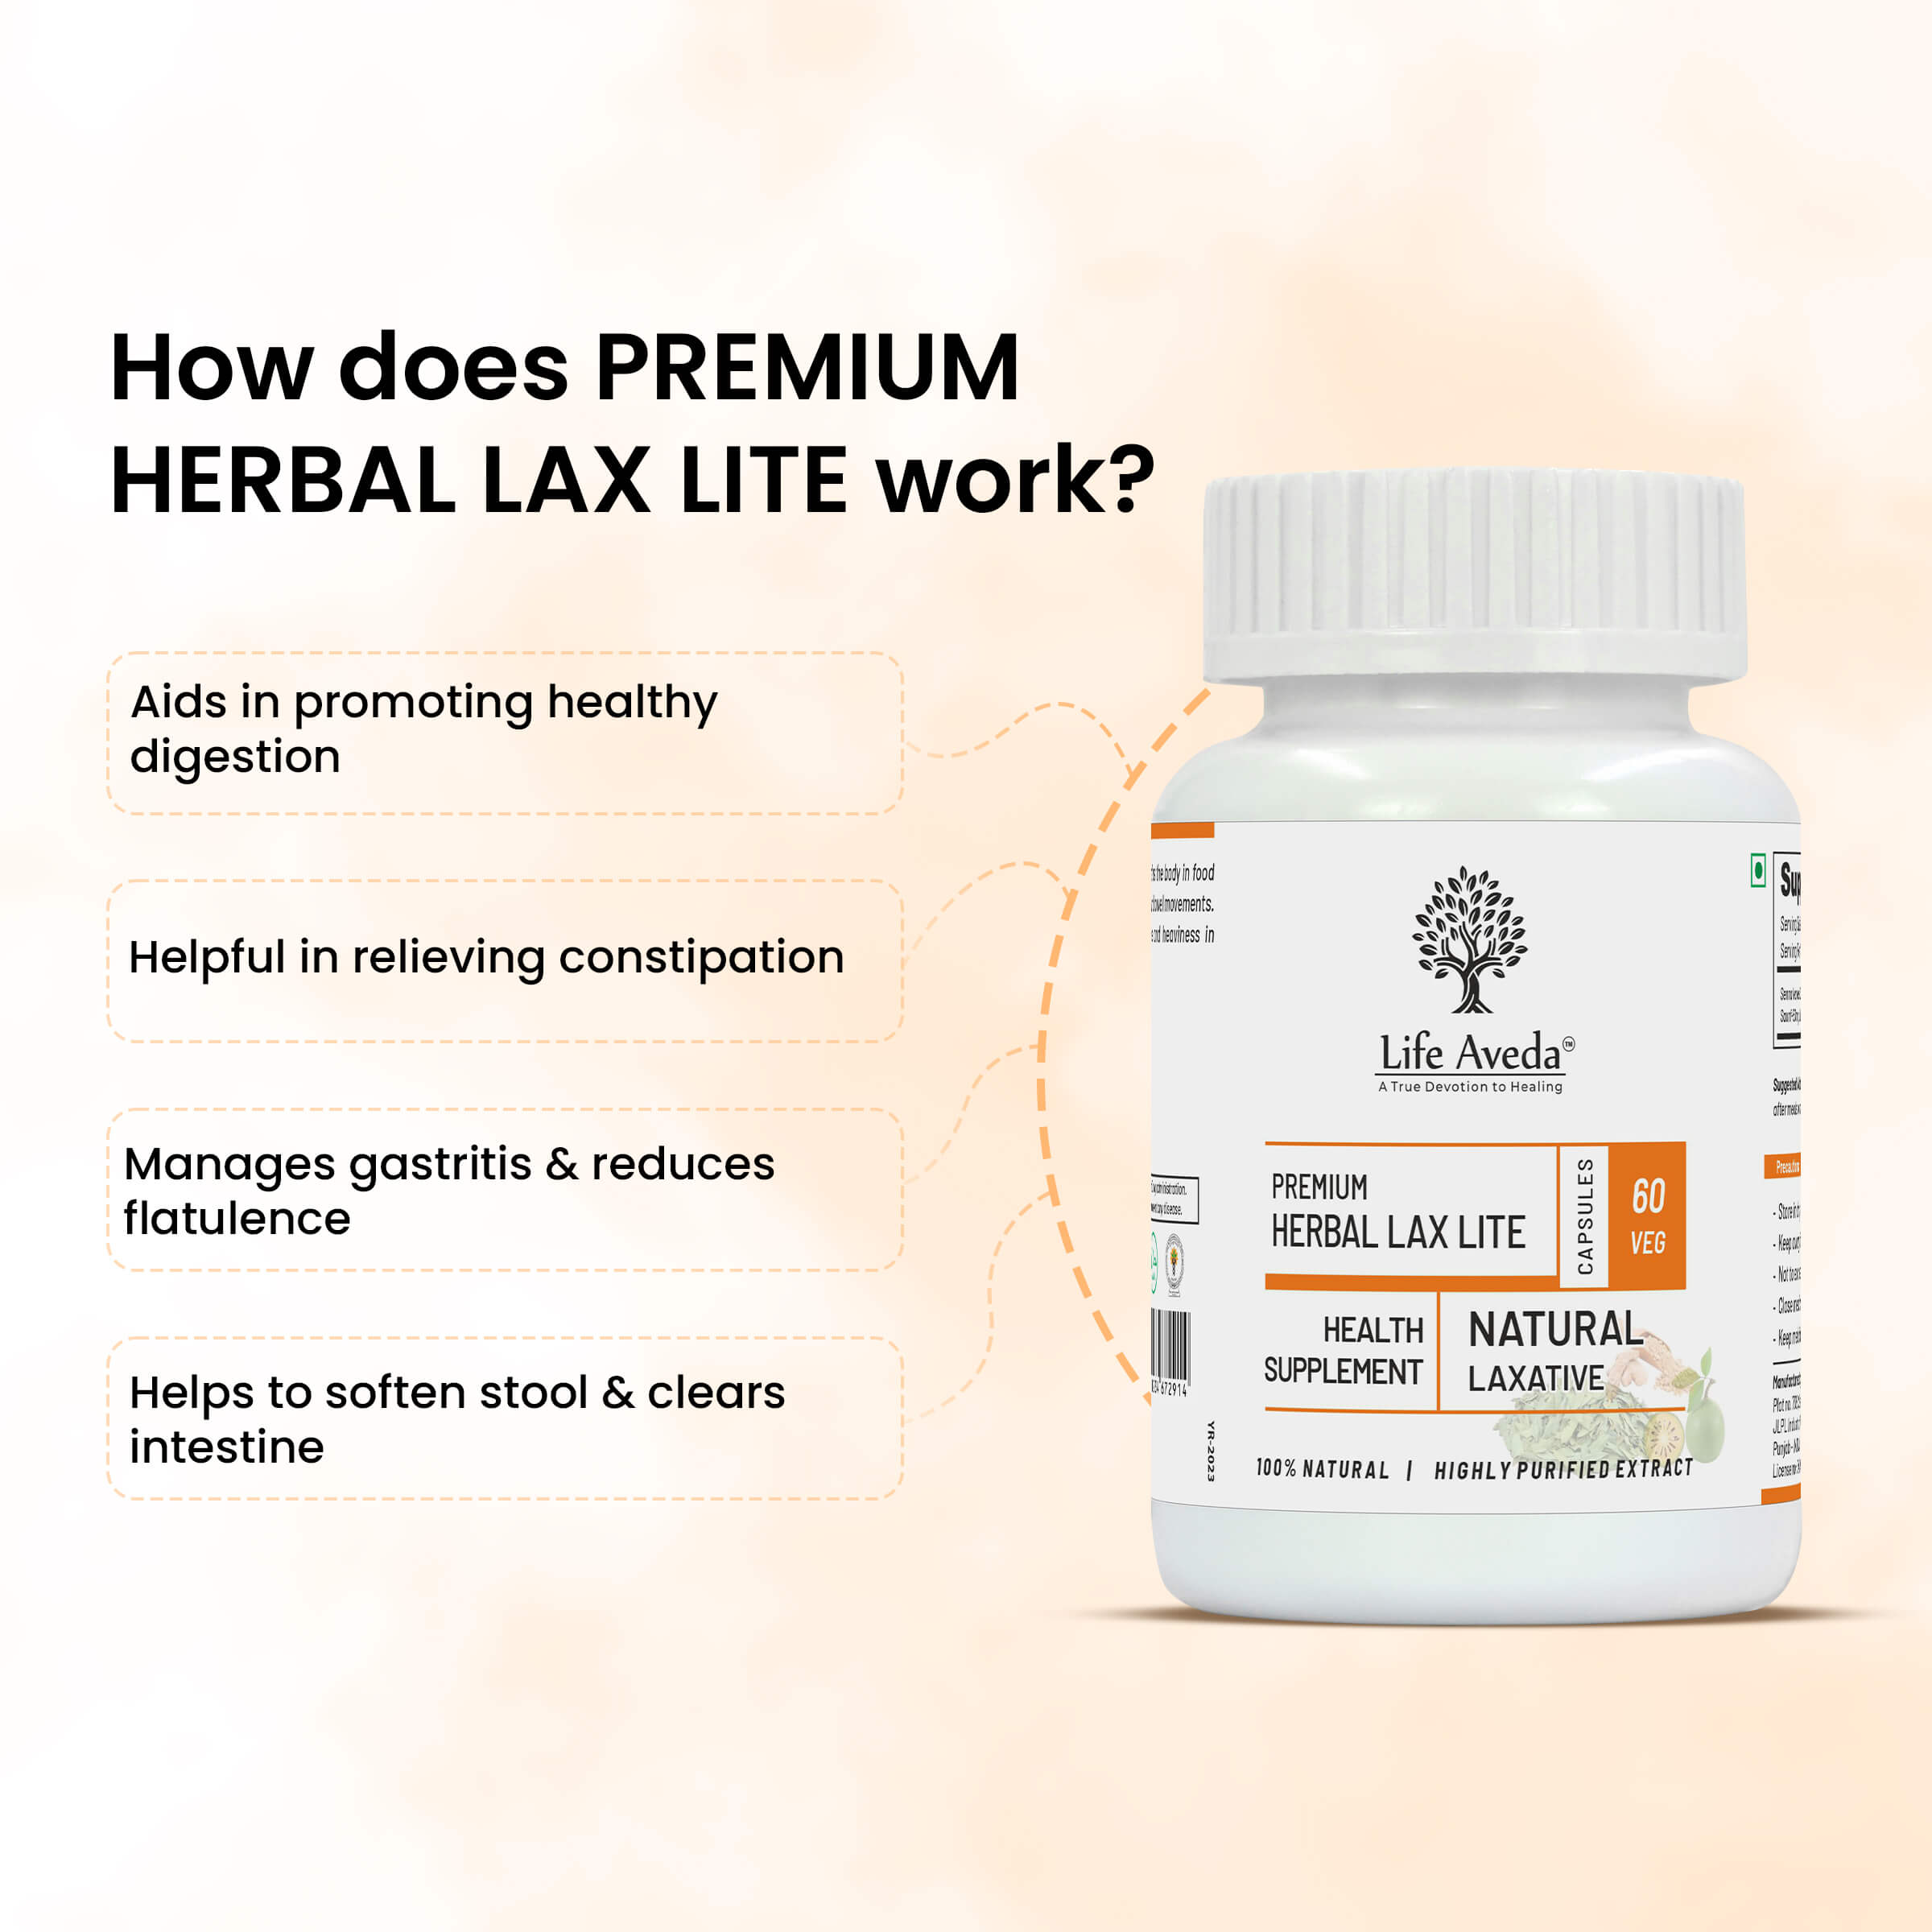 Life Aveda Premium Herbal Lax Lite Benefits